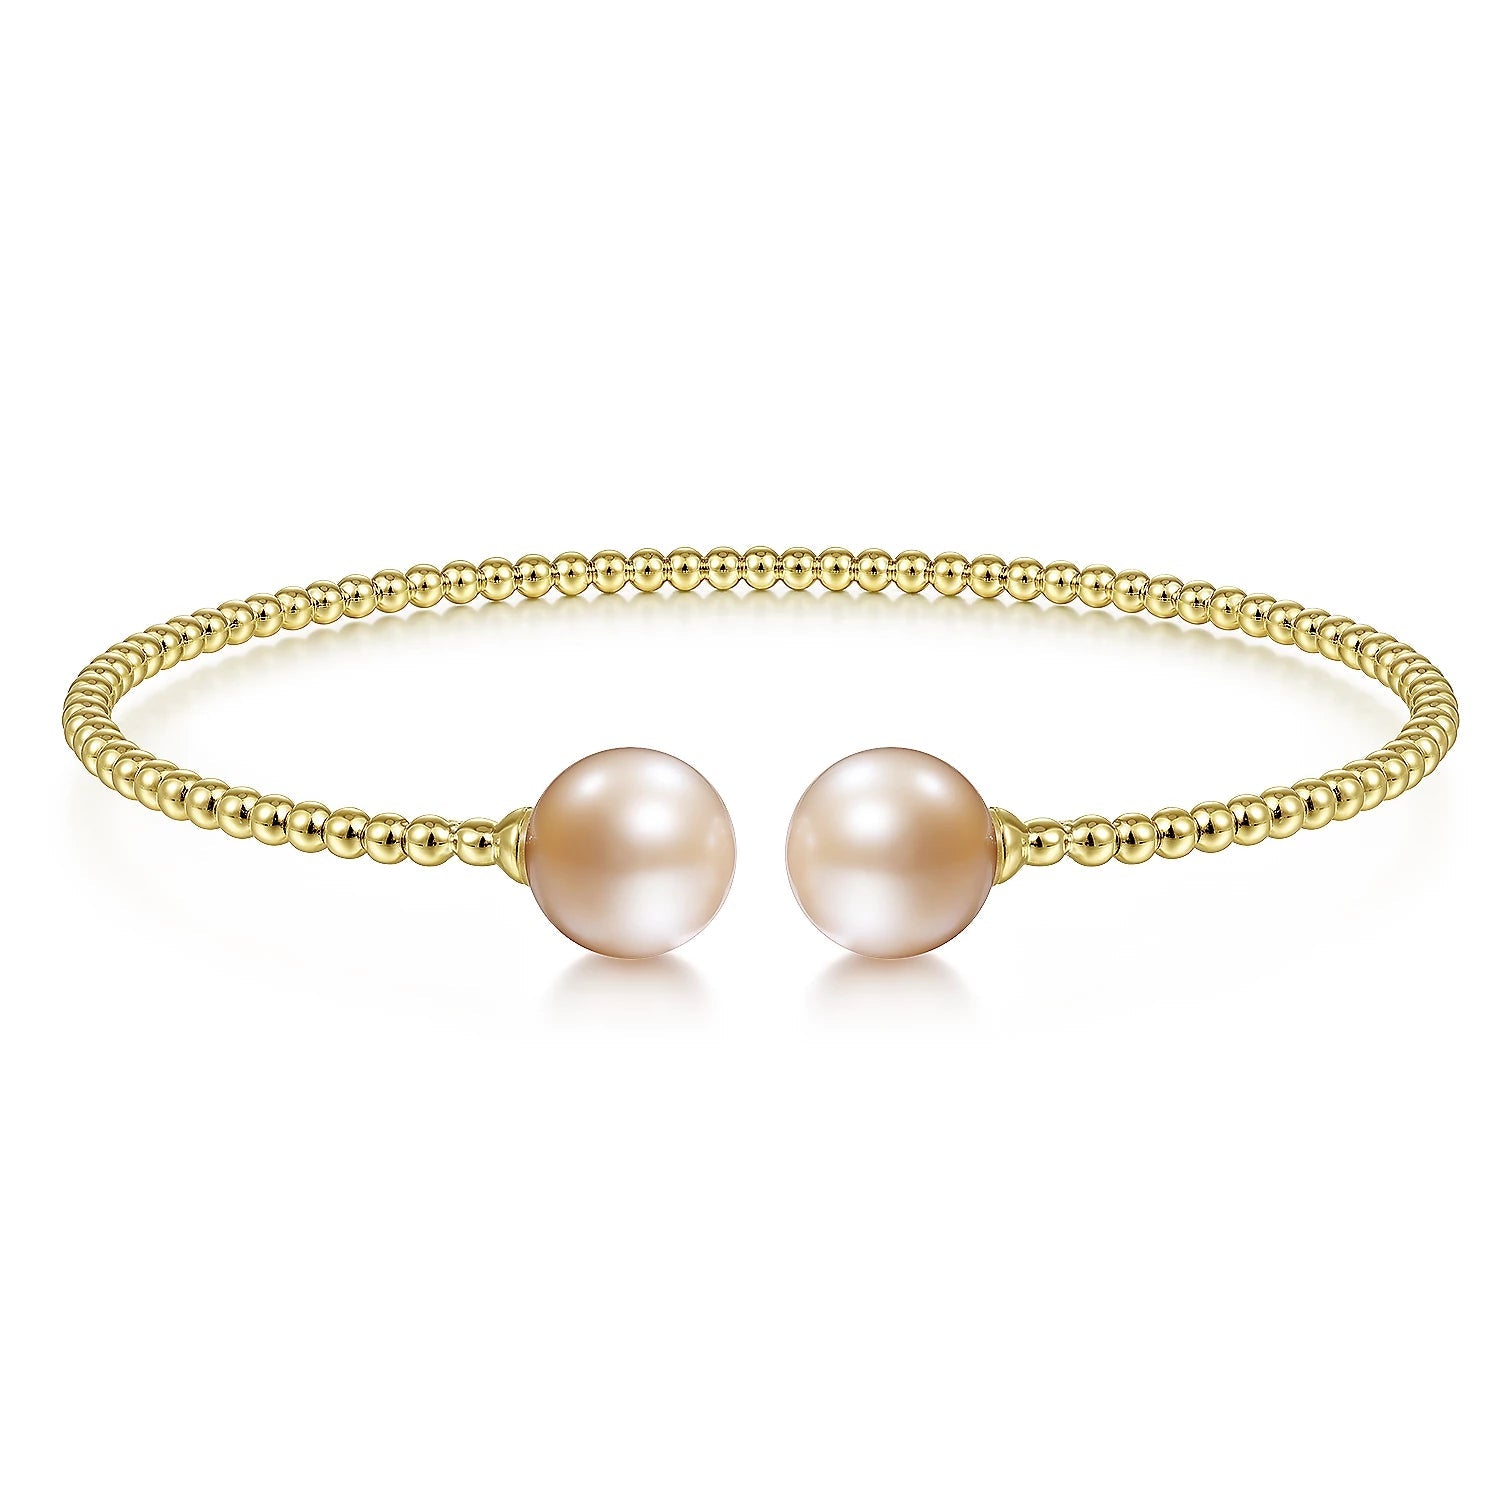 Bracelet cuff pink pearl bead - Gaines Jewelers